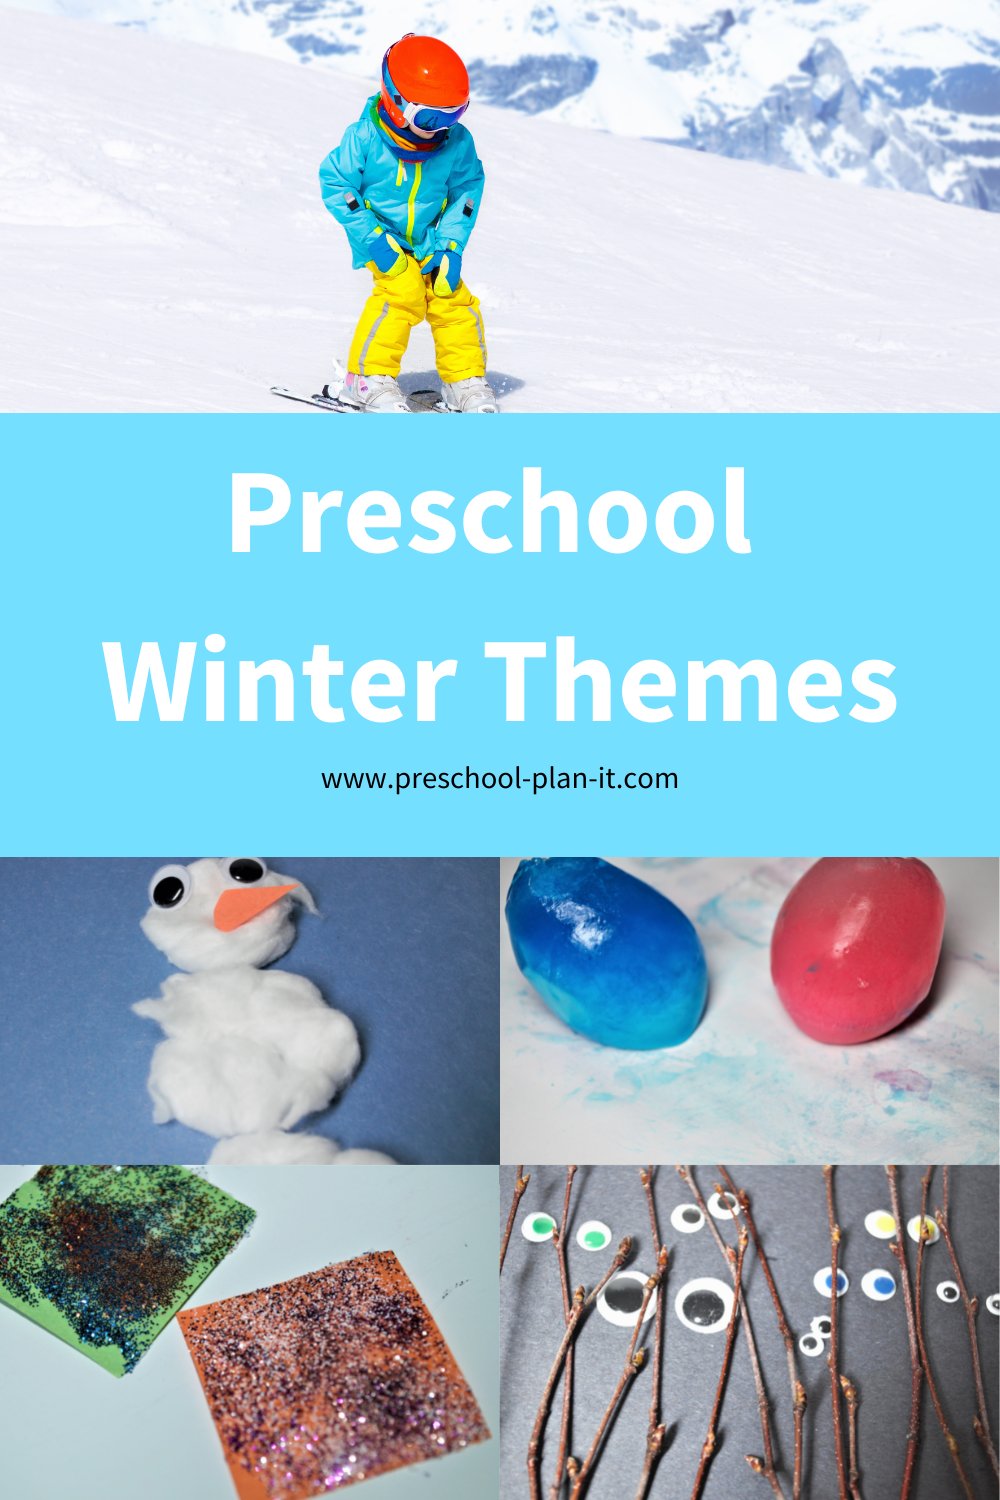 Preschool Winter Themes